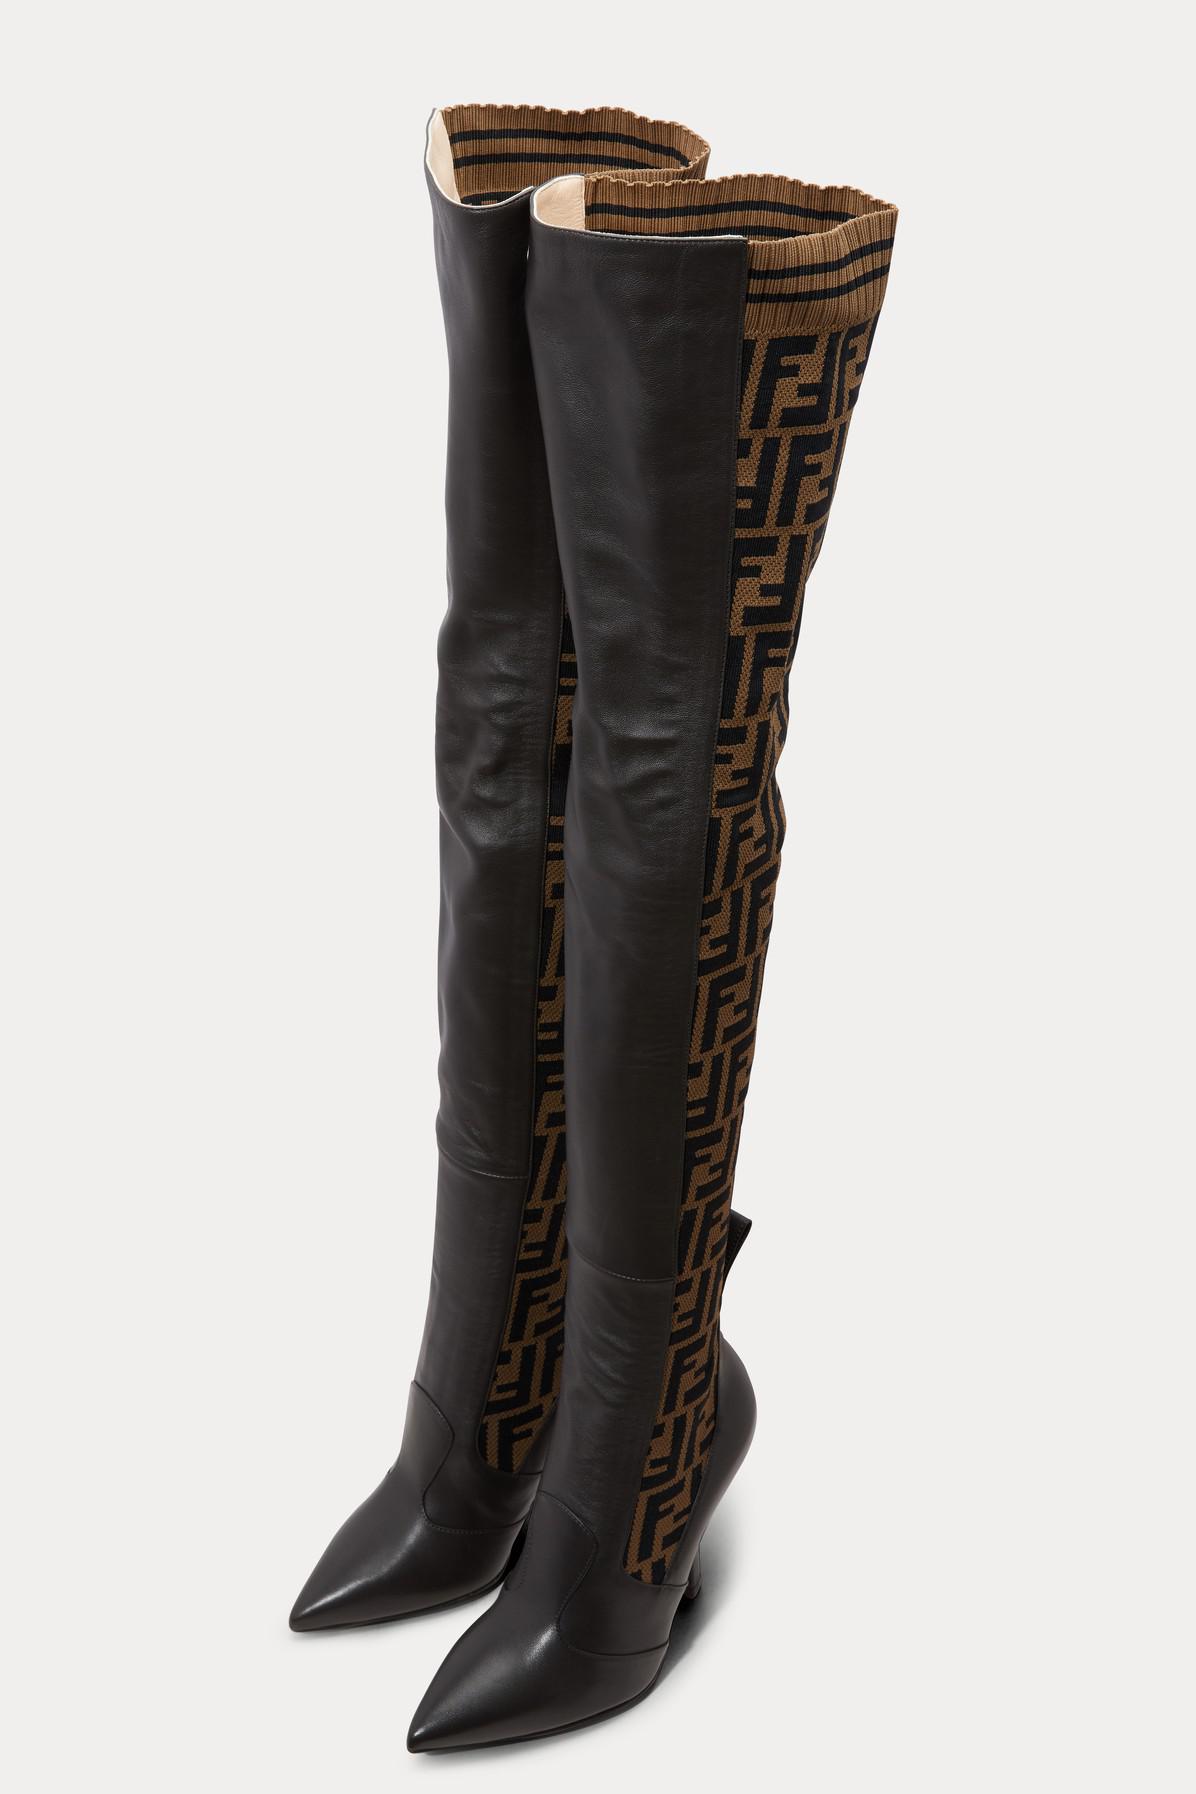 Fendi Rockoko Heeled Thigh-high Boots in Black - Lyst